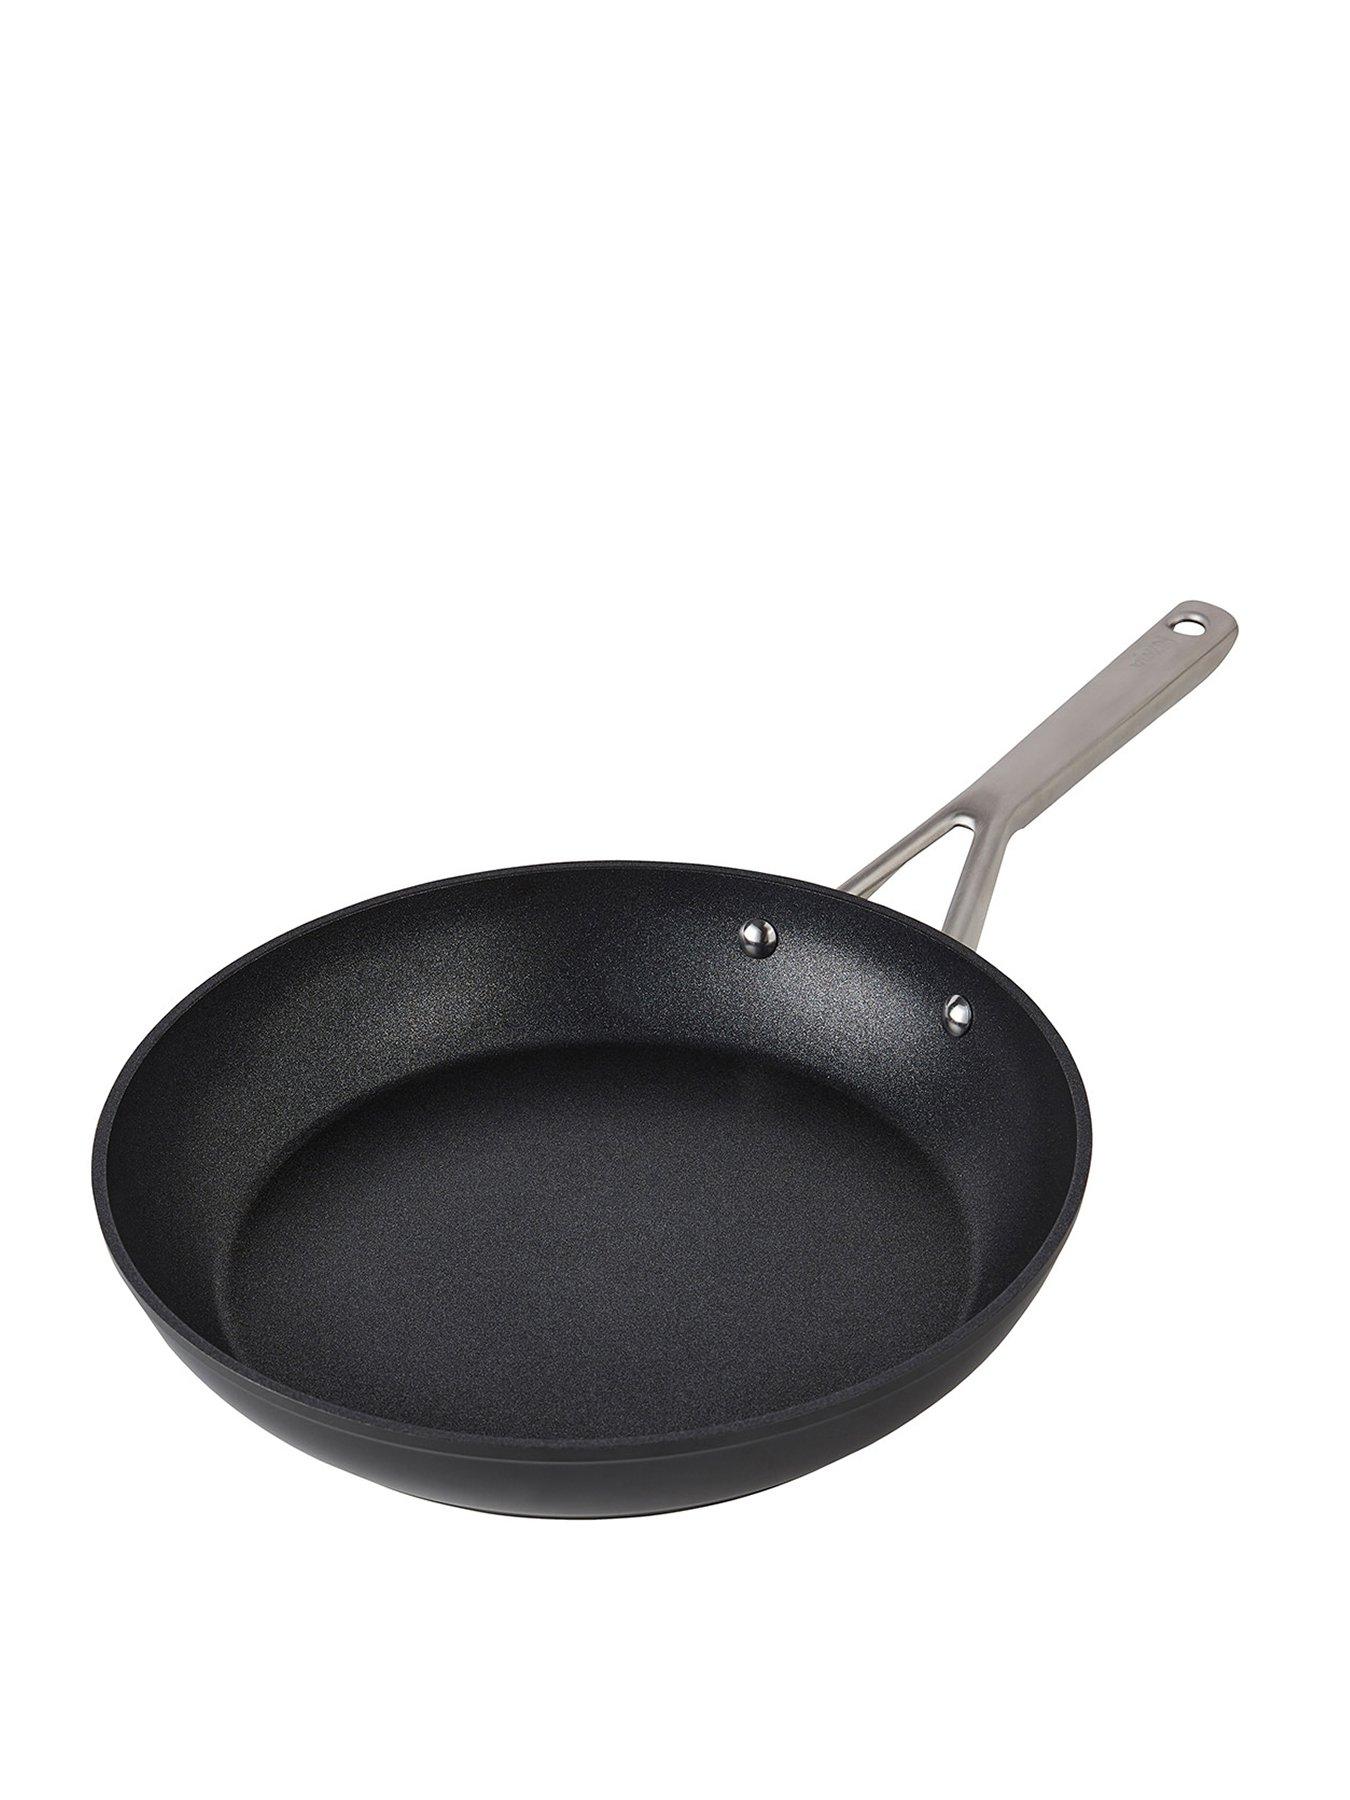 Cyrret Omelette Pan Small Skillet,Klein Blue Egg Pans Nonstick,Non